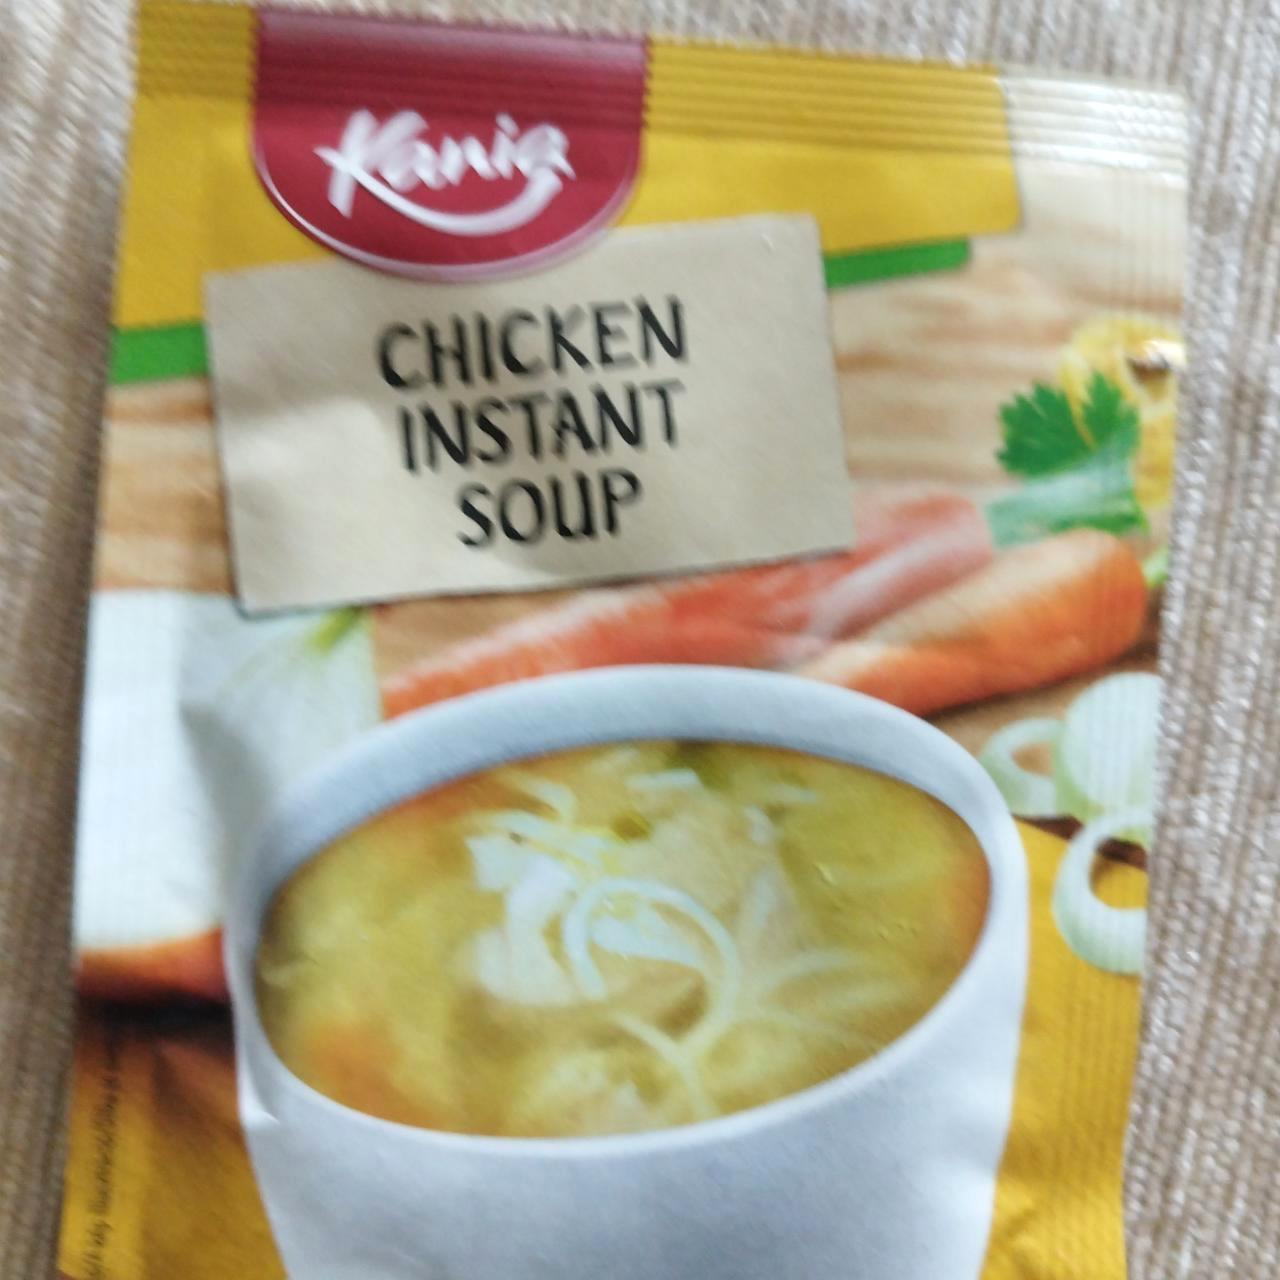 Képek - Chicken instant sup Kania